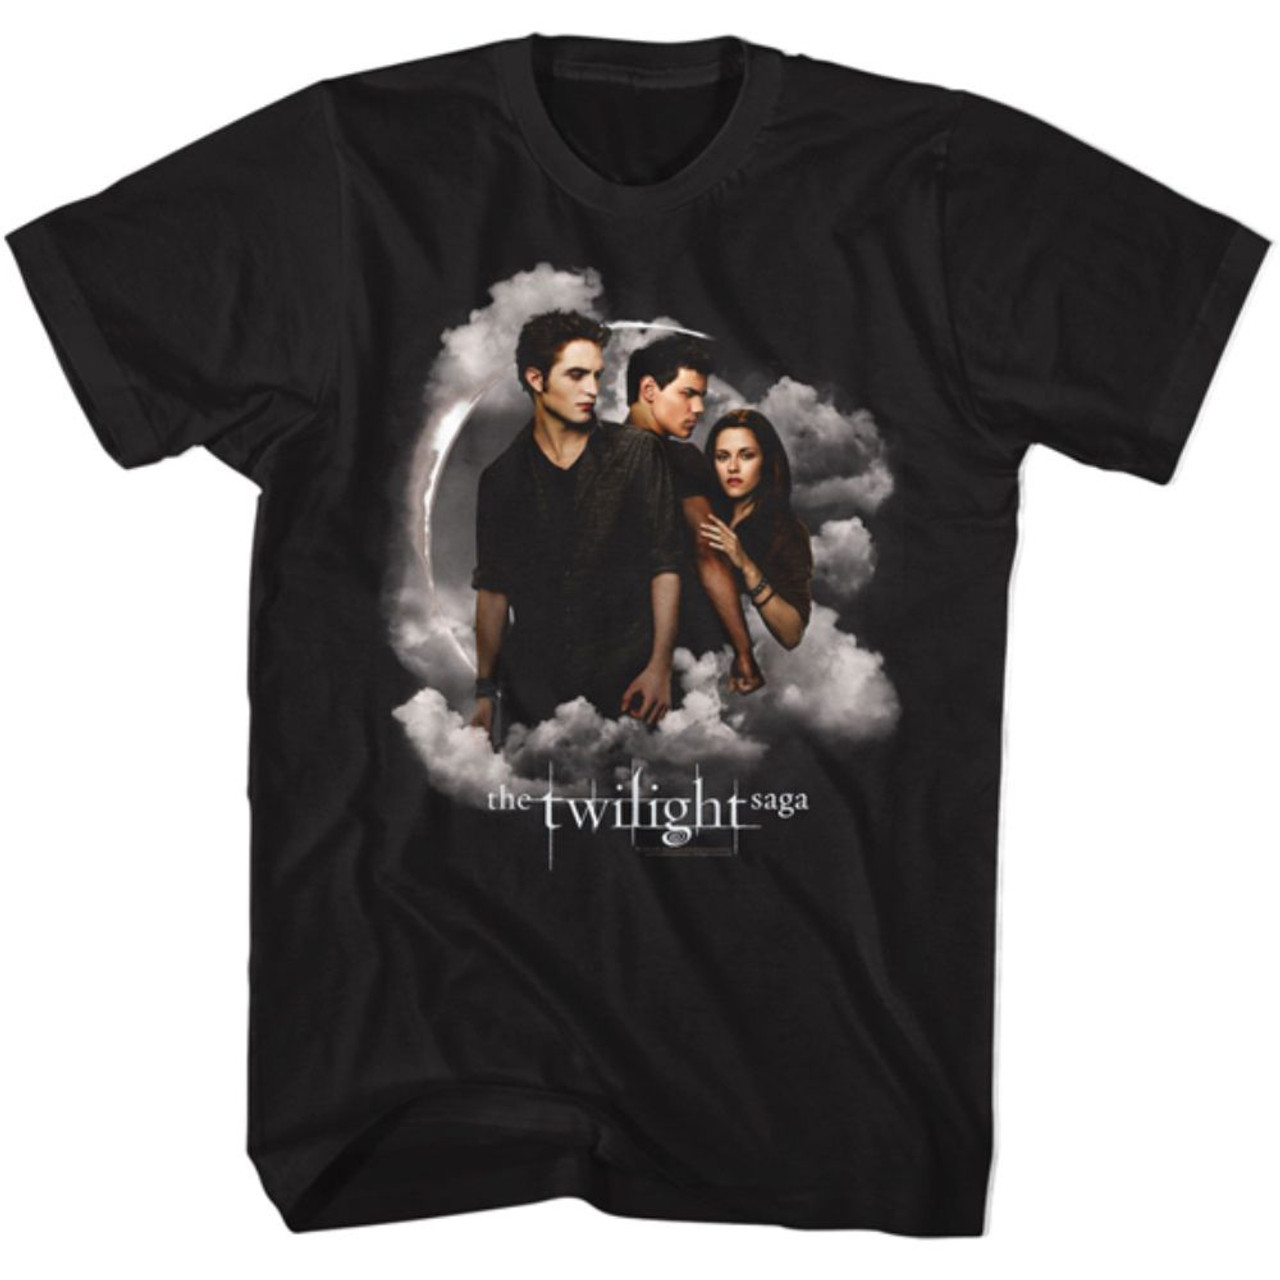 OFFICIAL Twilight Shirts & Merchandise